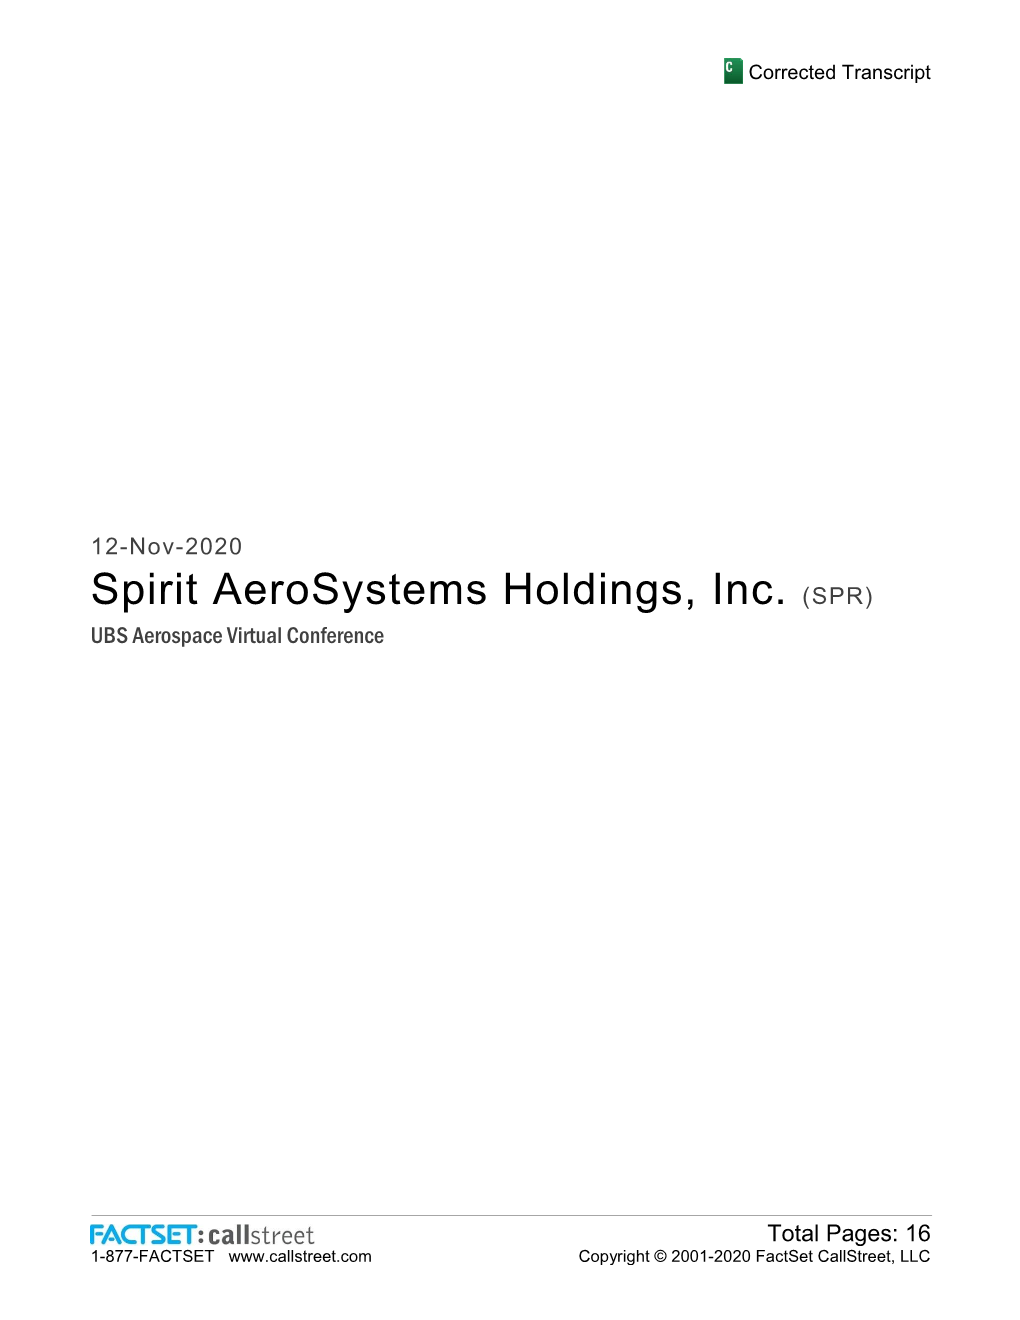 Spirit Aerosystems Holdings, Inc. (SPR) UBS Aerospace Virtual Conference